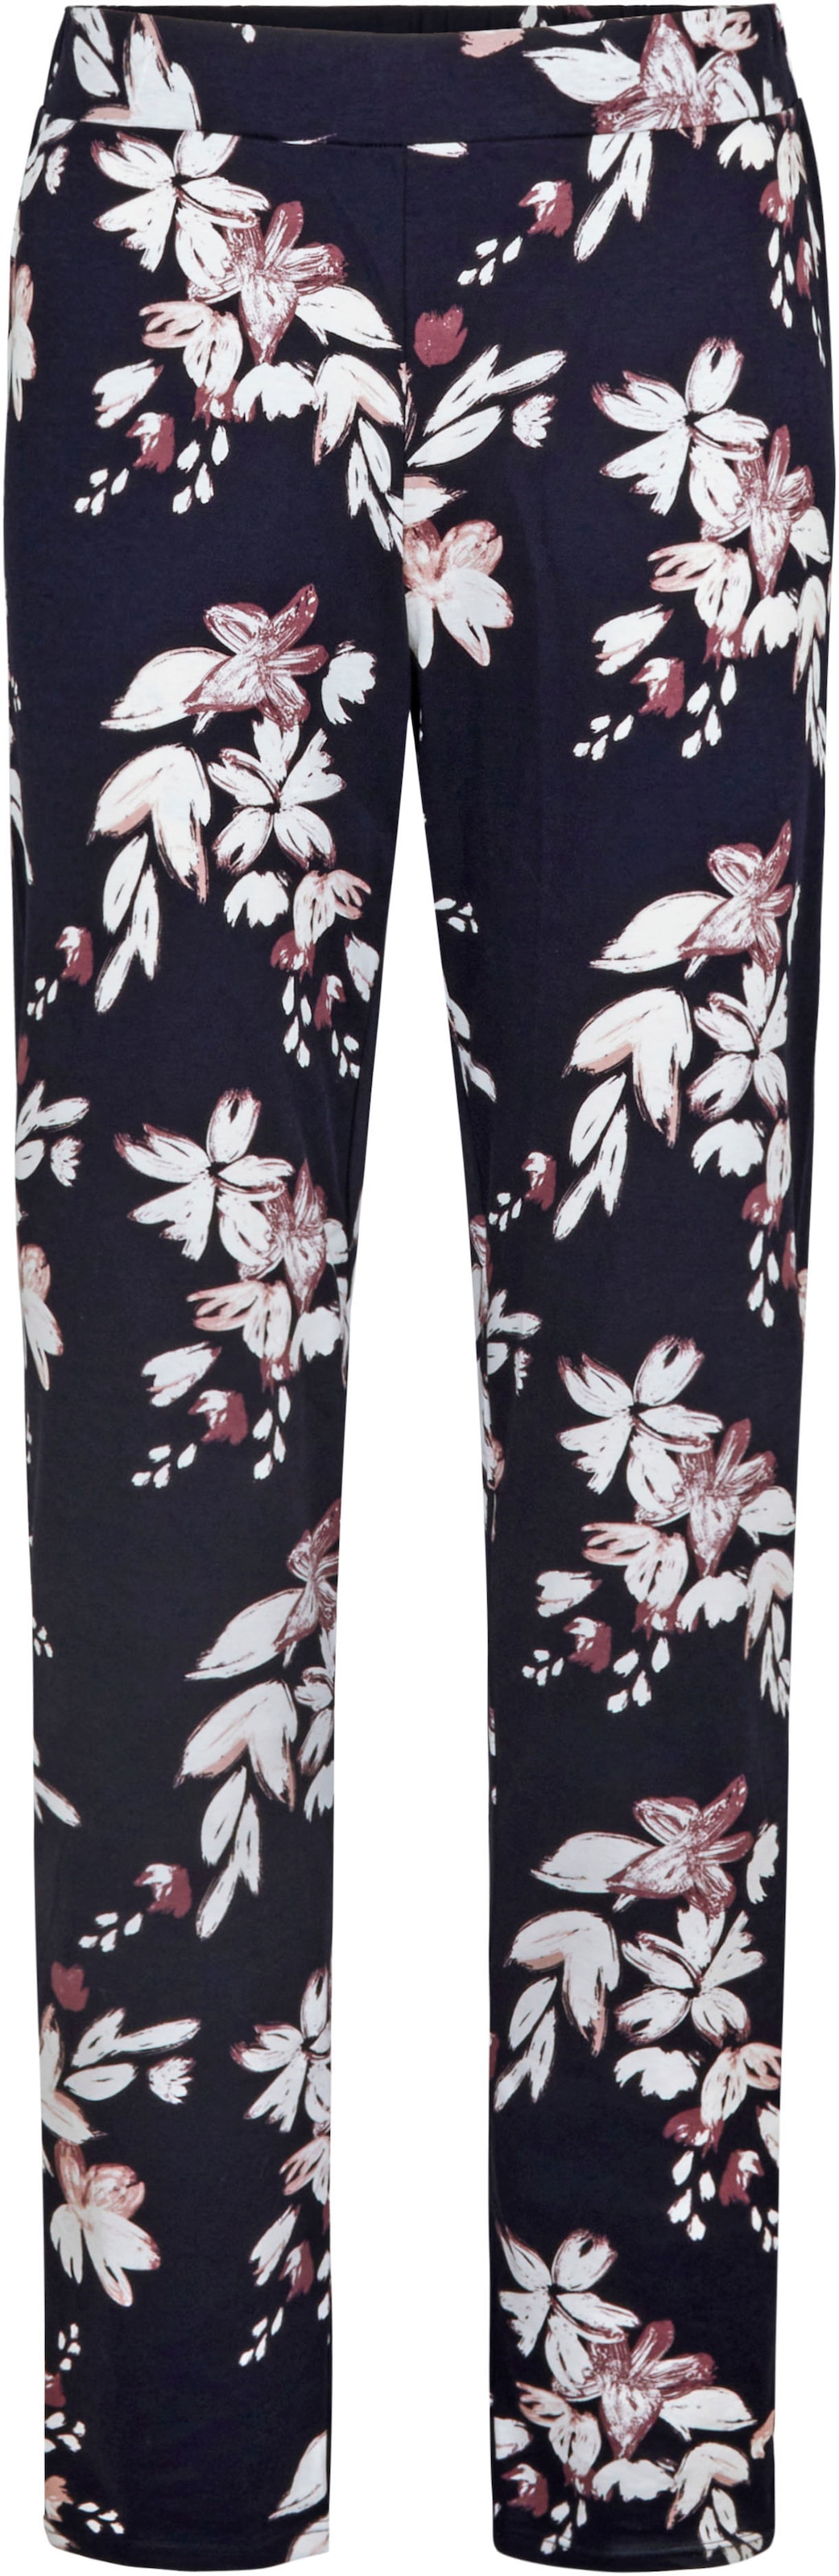 CALIDA Homewearhose »Favourites Dreams«, Loungehose mit floralem Muster, Pants mit Blumendruck